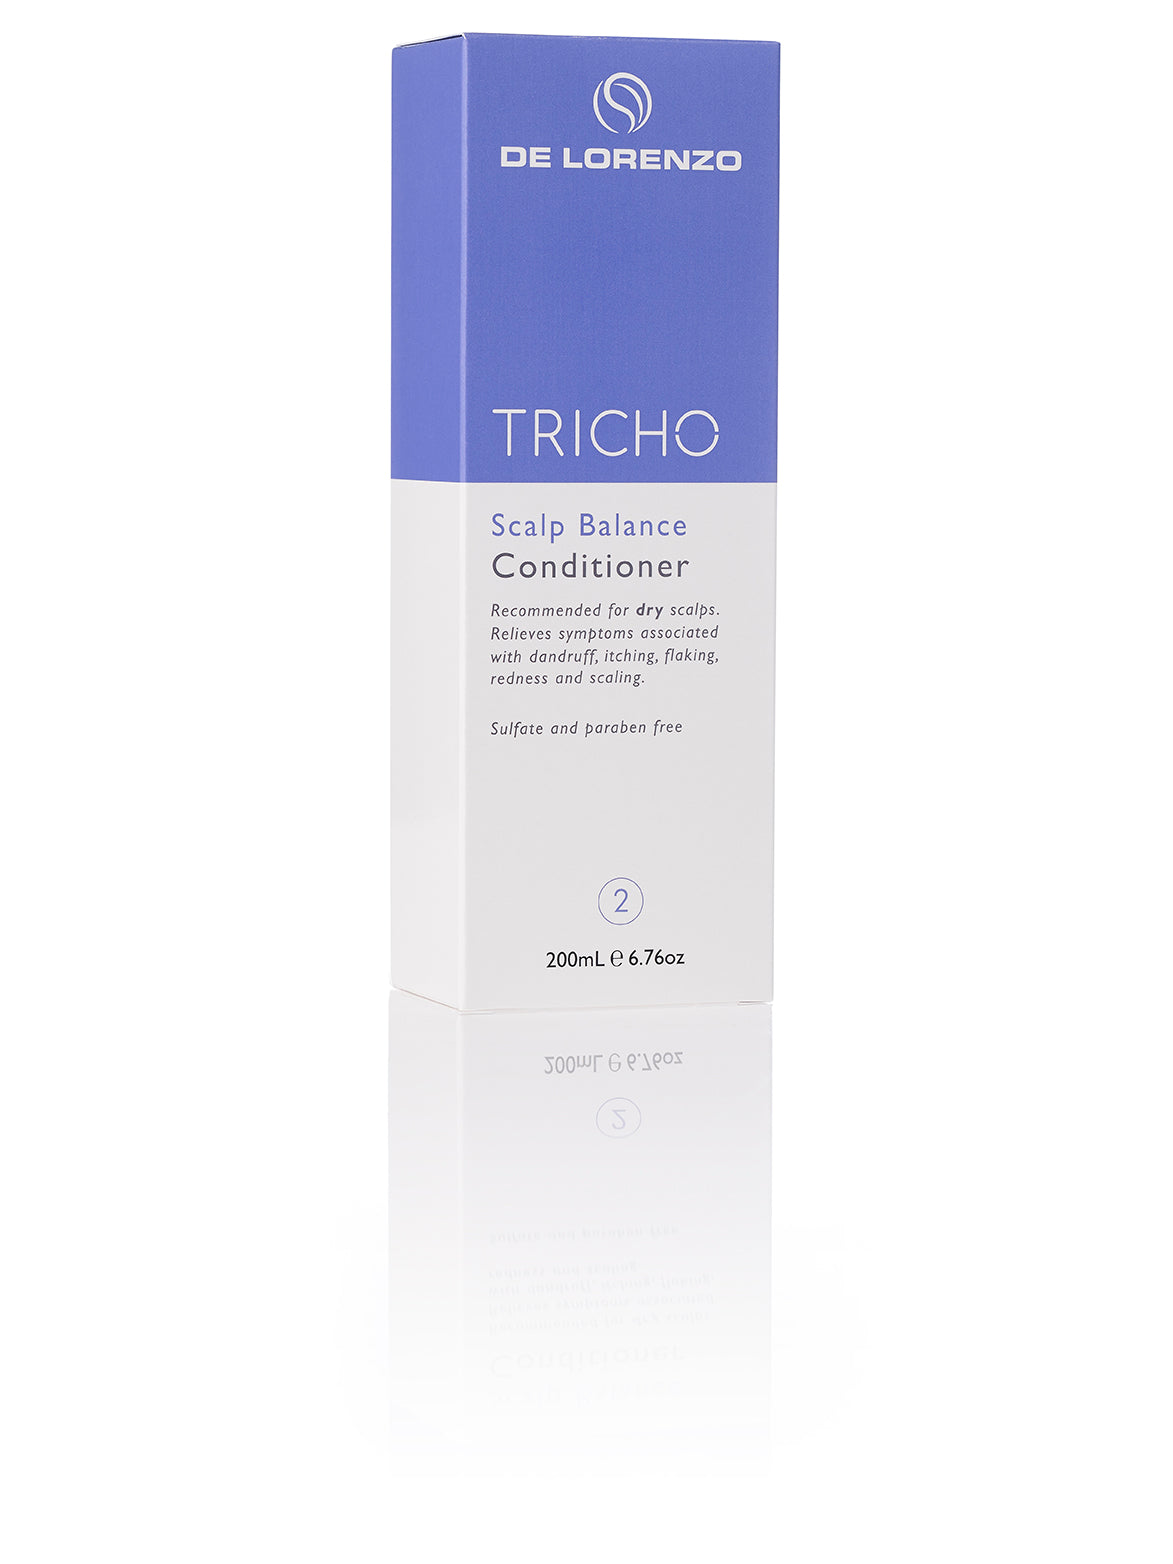 TRICHO Scalp Balance Conditioner